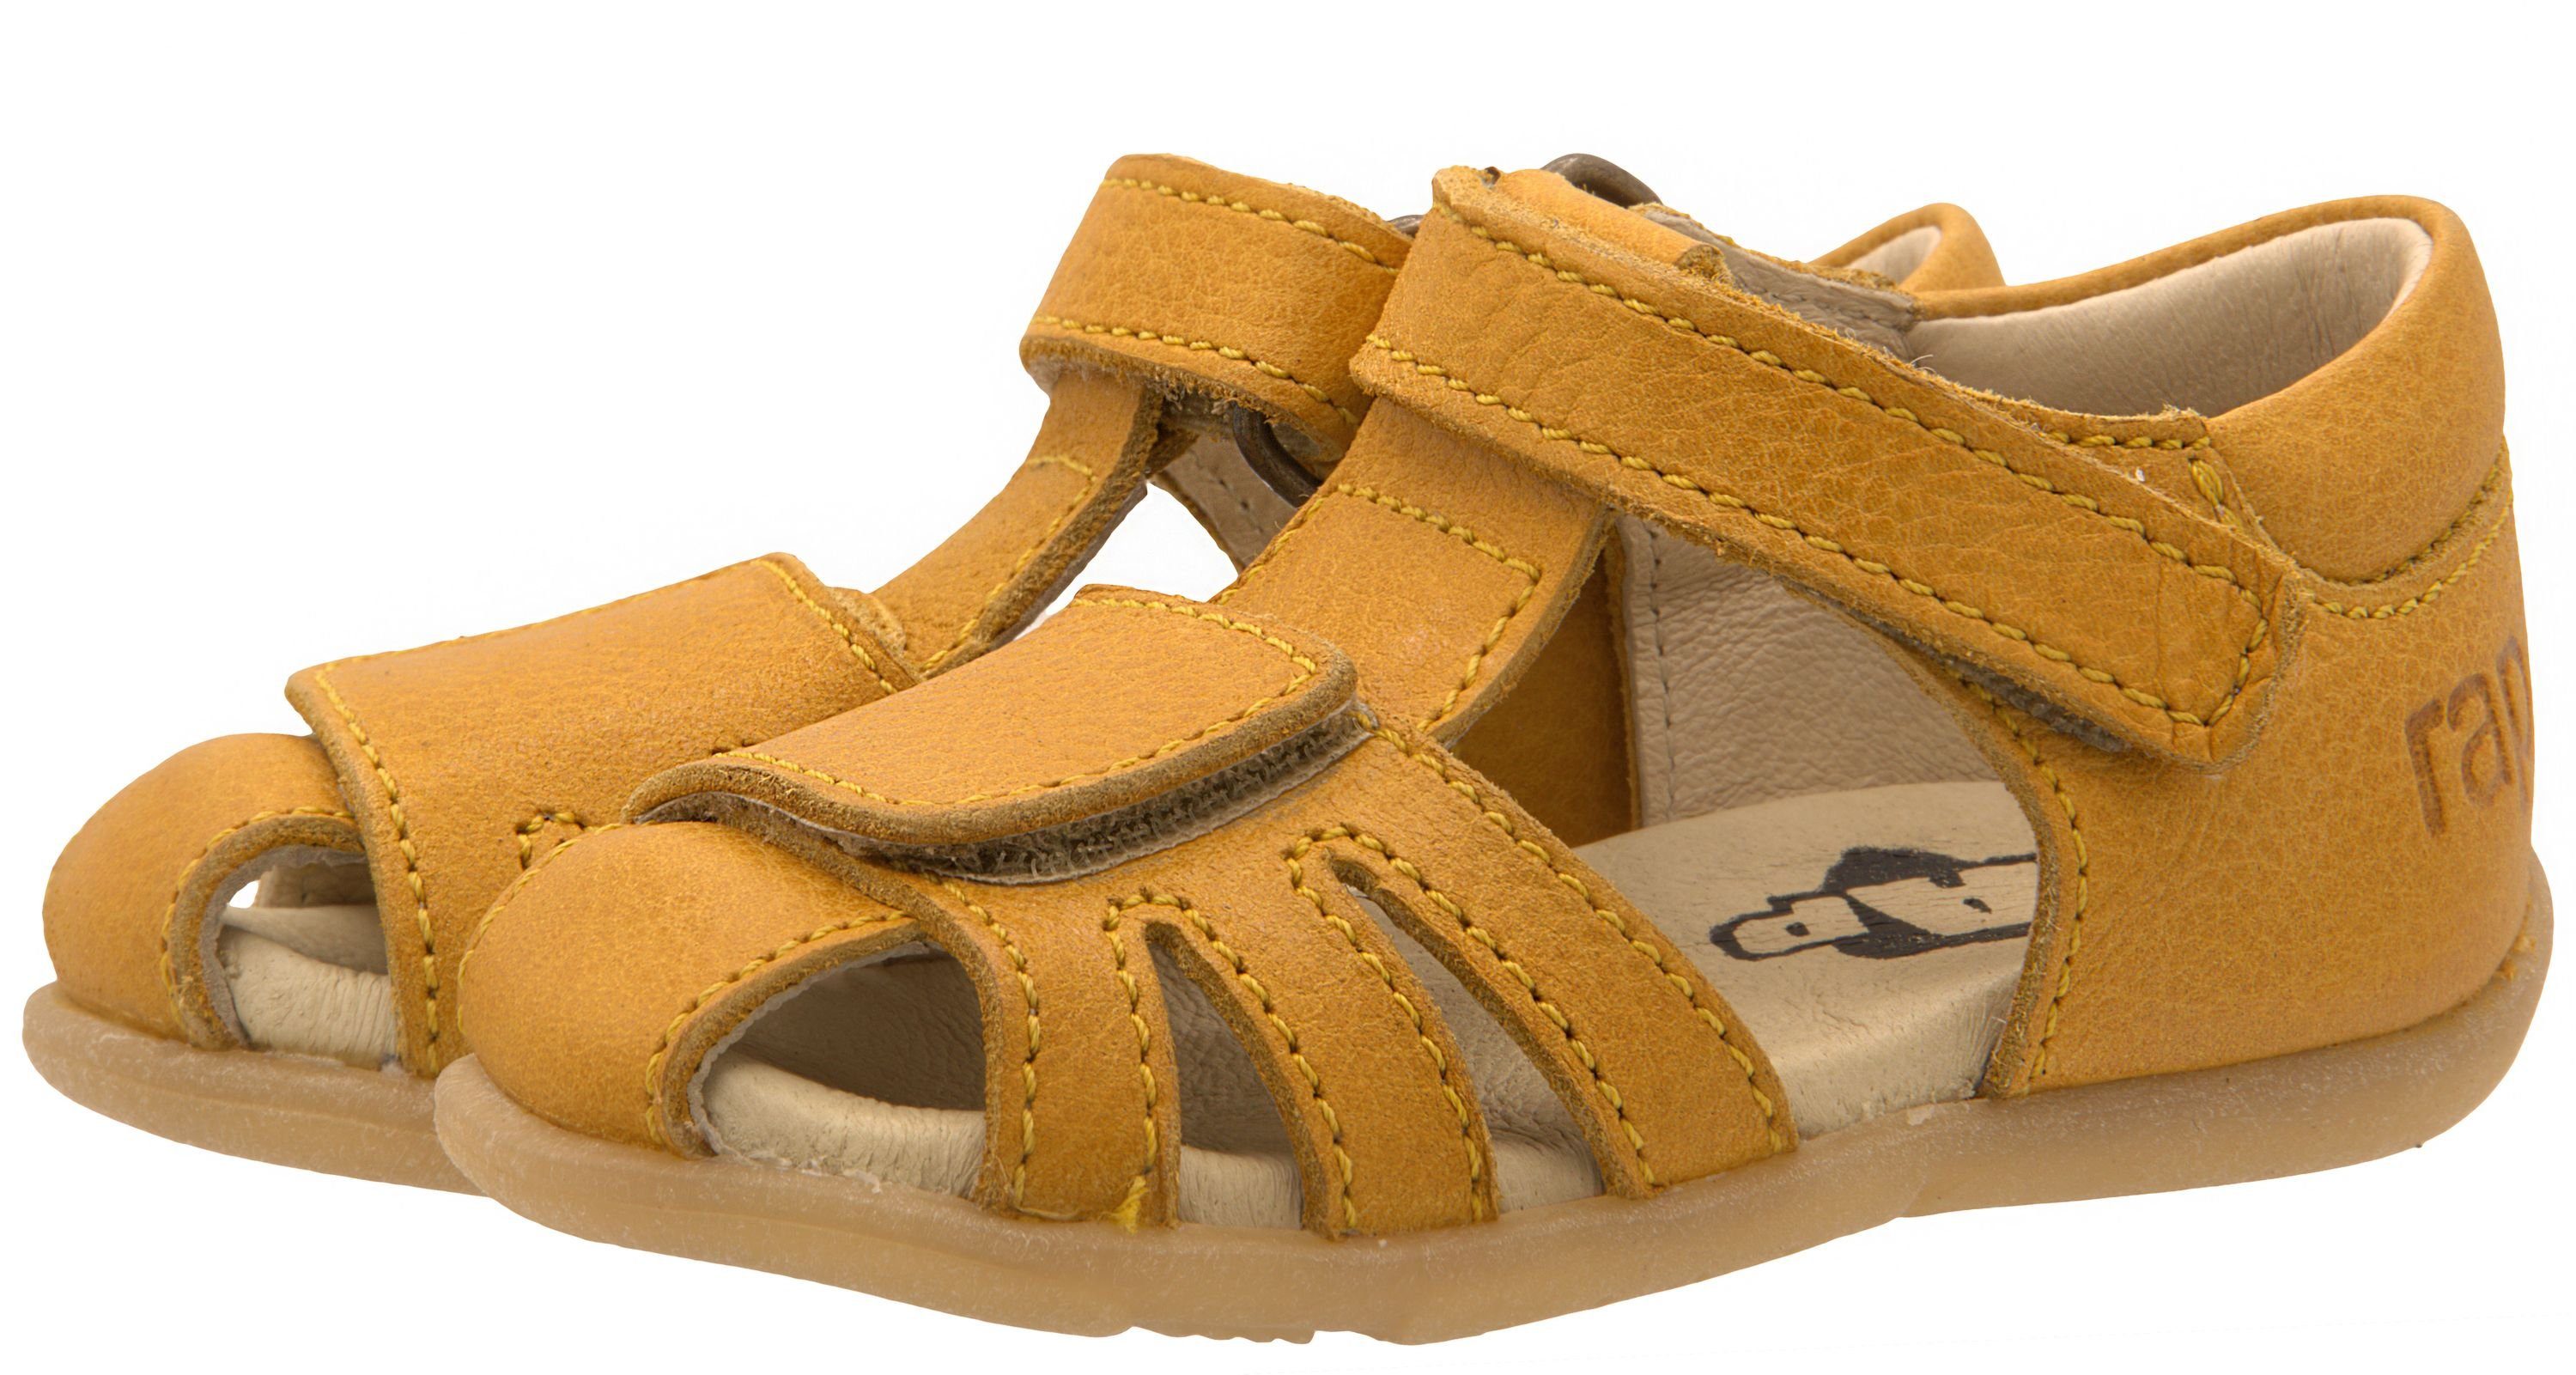 Aurato Rap erste Arauto Rap Sandalette gelb Leder Sandalen Kleinkind Schuhe